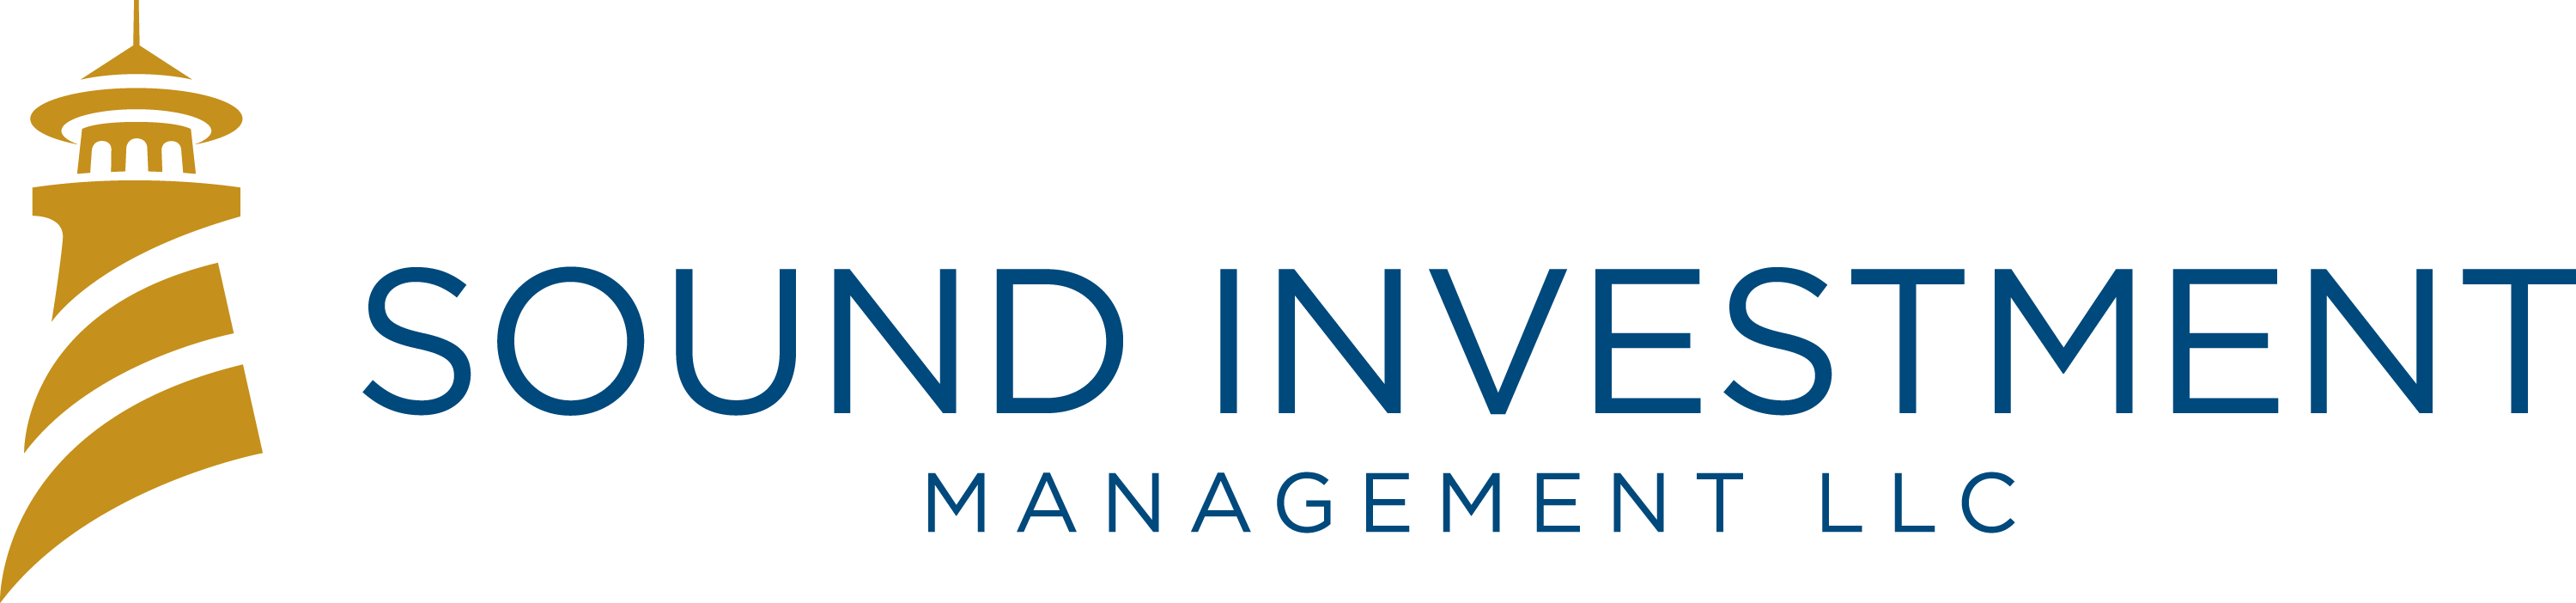 Sound Investment Management, LLC